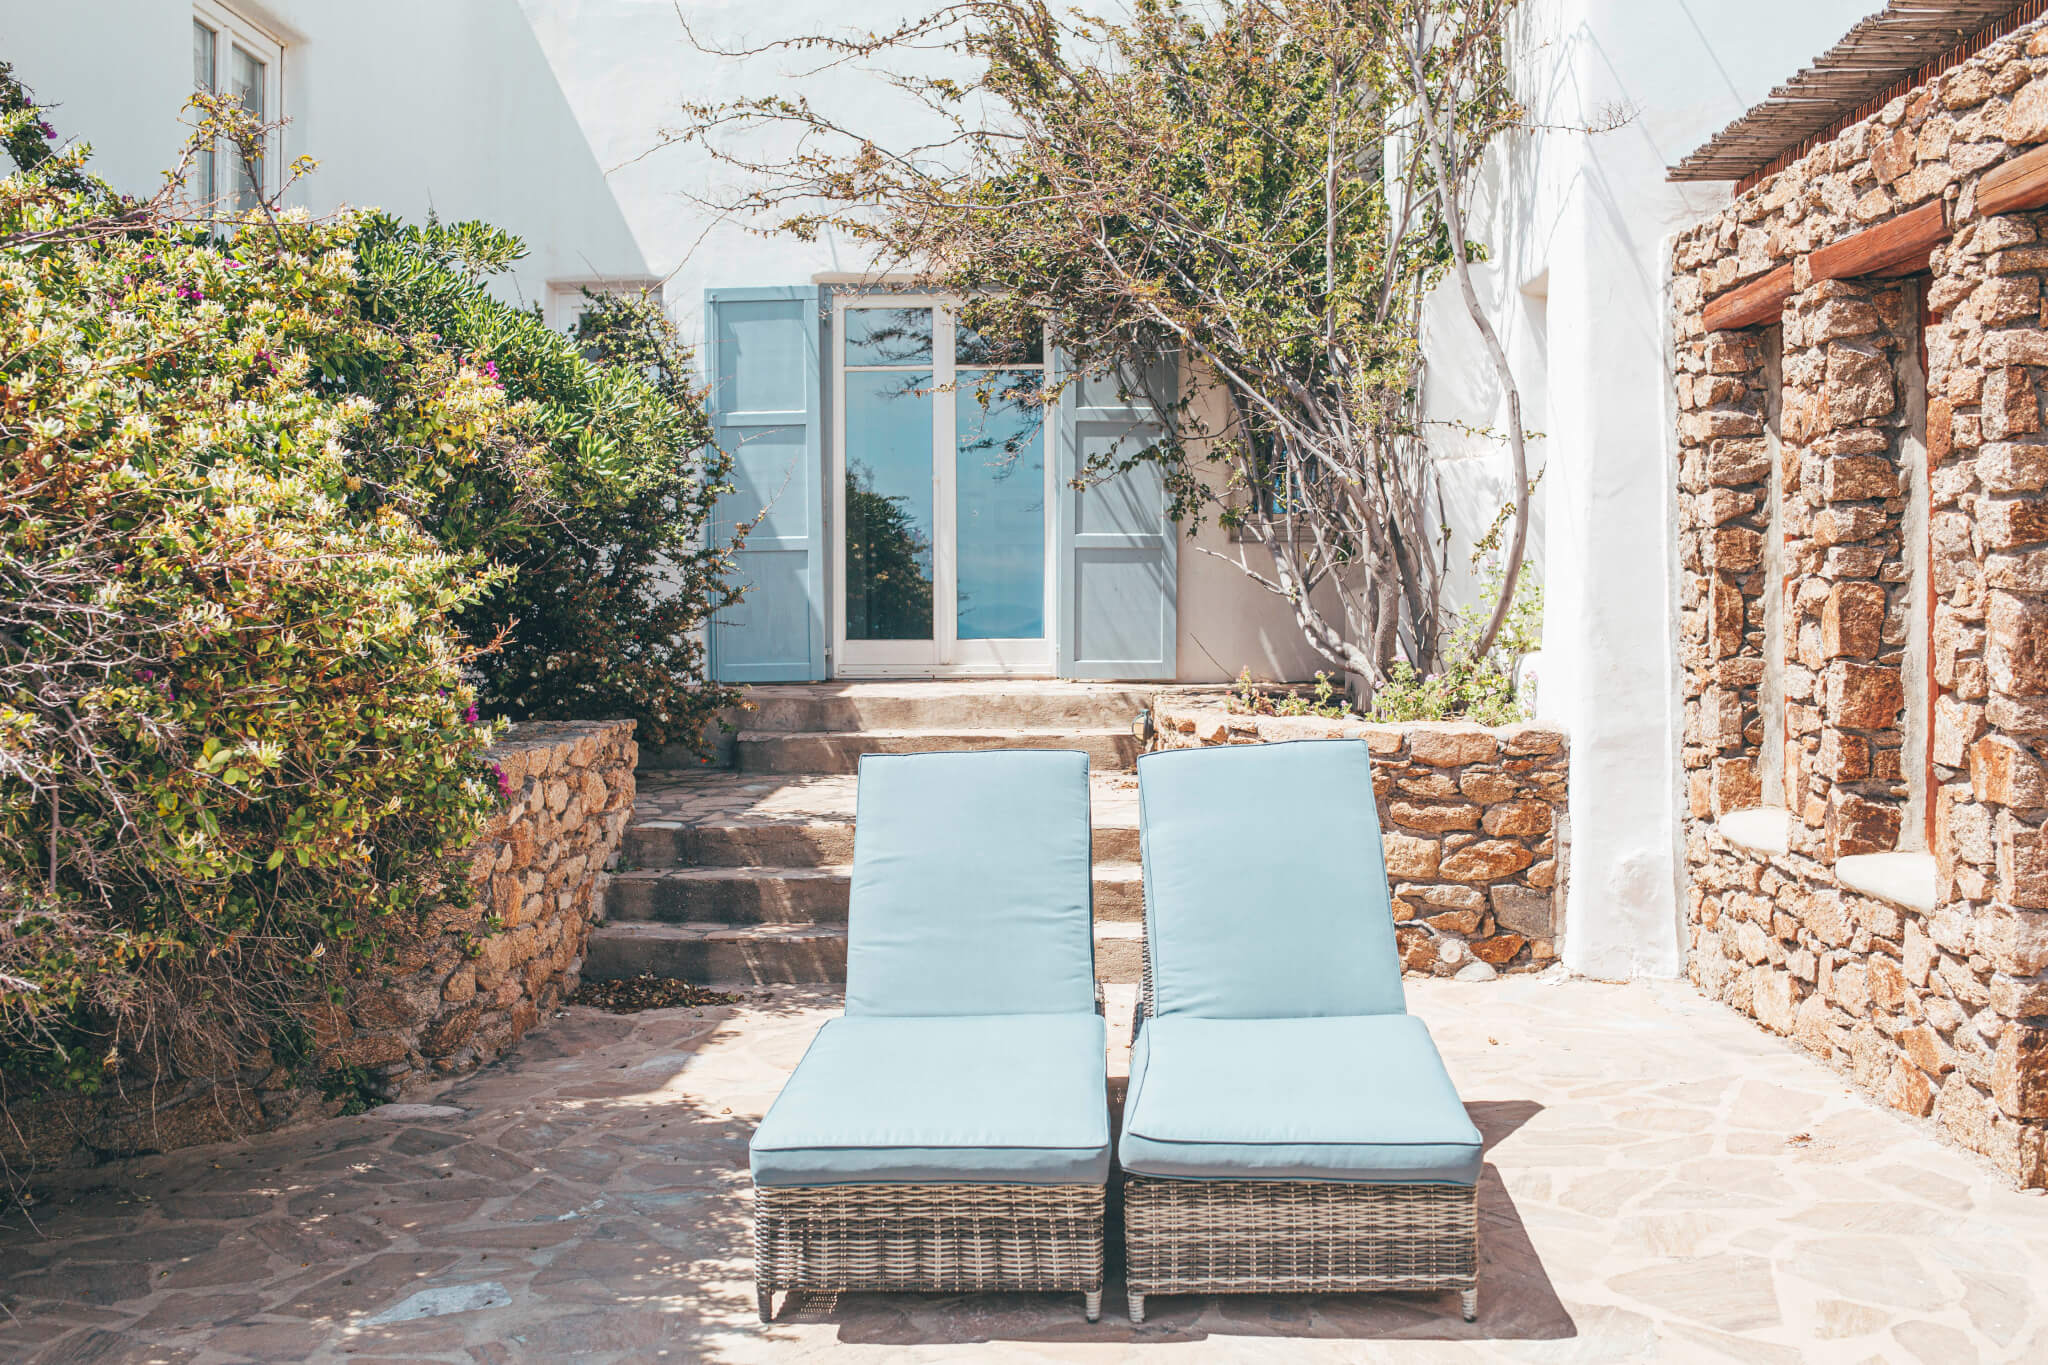 Dolce-Vita-Mykonos-Villa-24-of-44 Our Stay at Mykonos Luxury Villa Dolce Vita